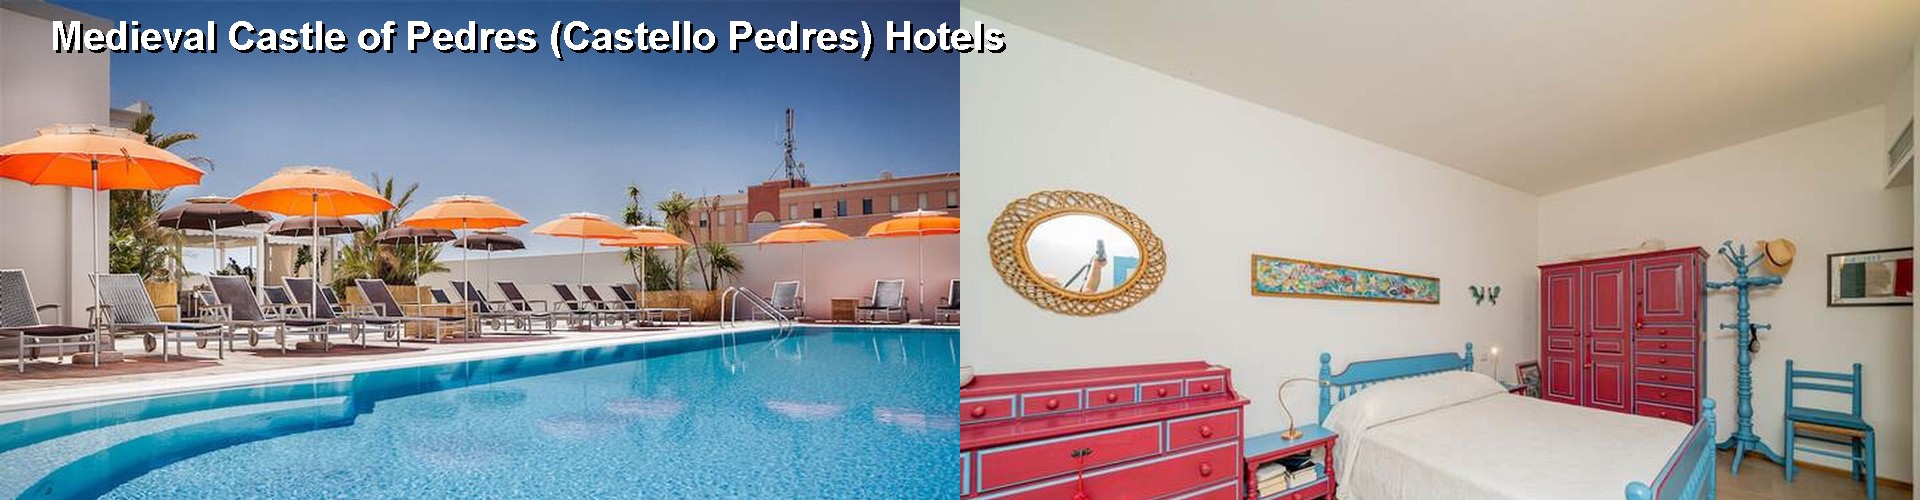 5 Best Hotels near Medieval Castle of Pedres (Castello Pedres)